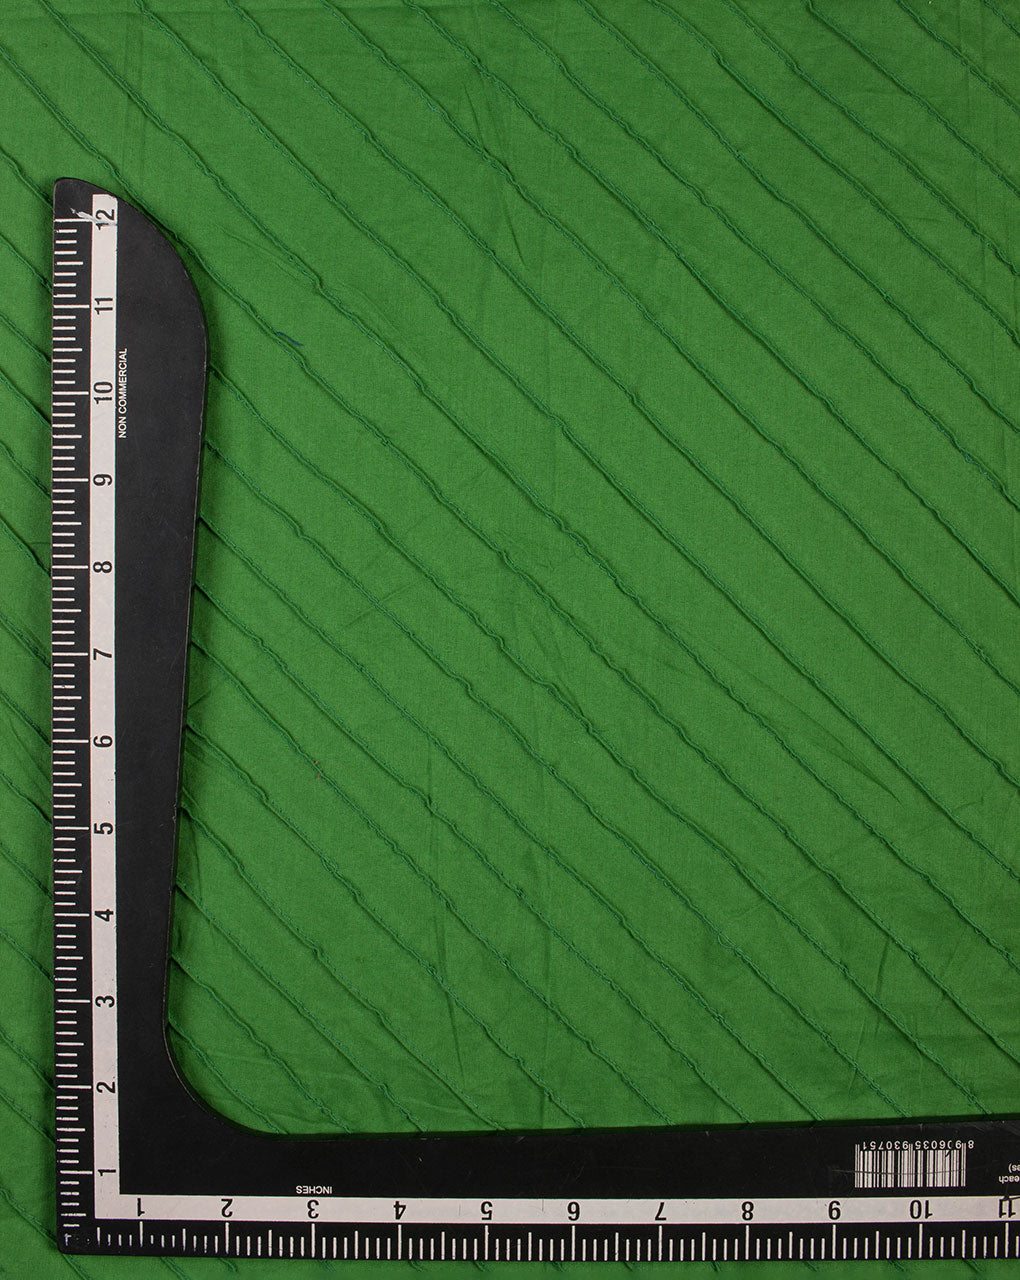 Green Pin-Tucks Cotton Fabric - Fabriclore.com